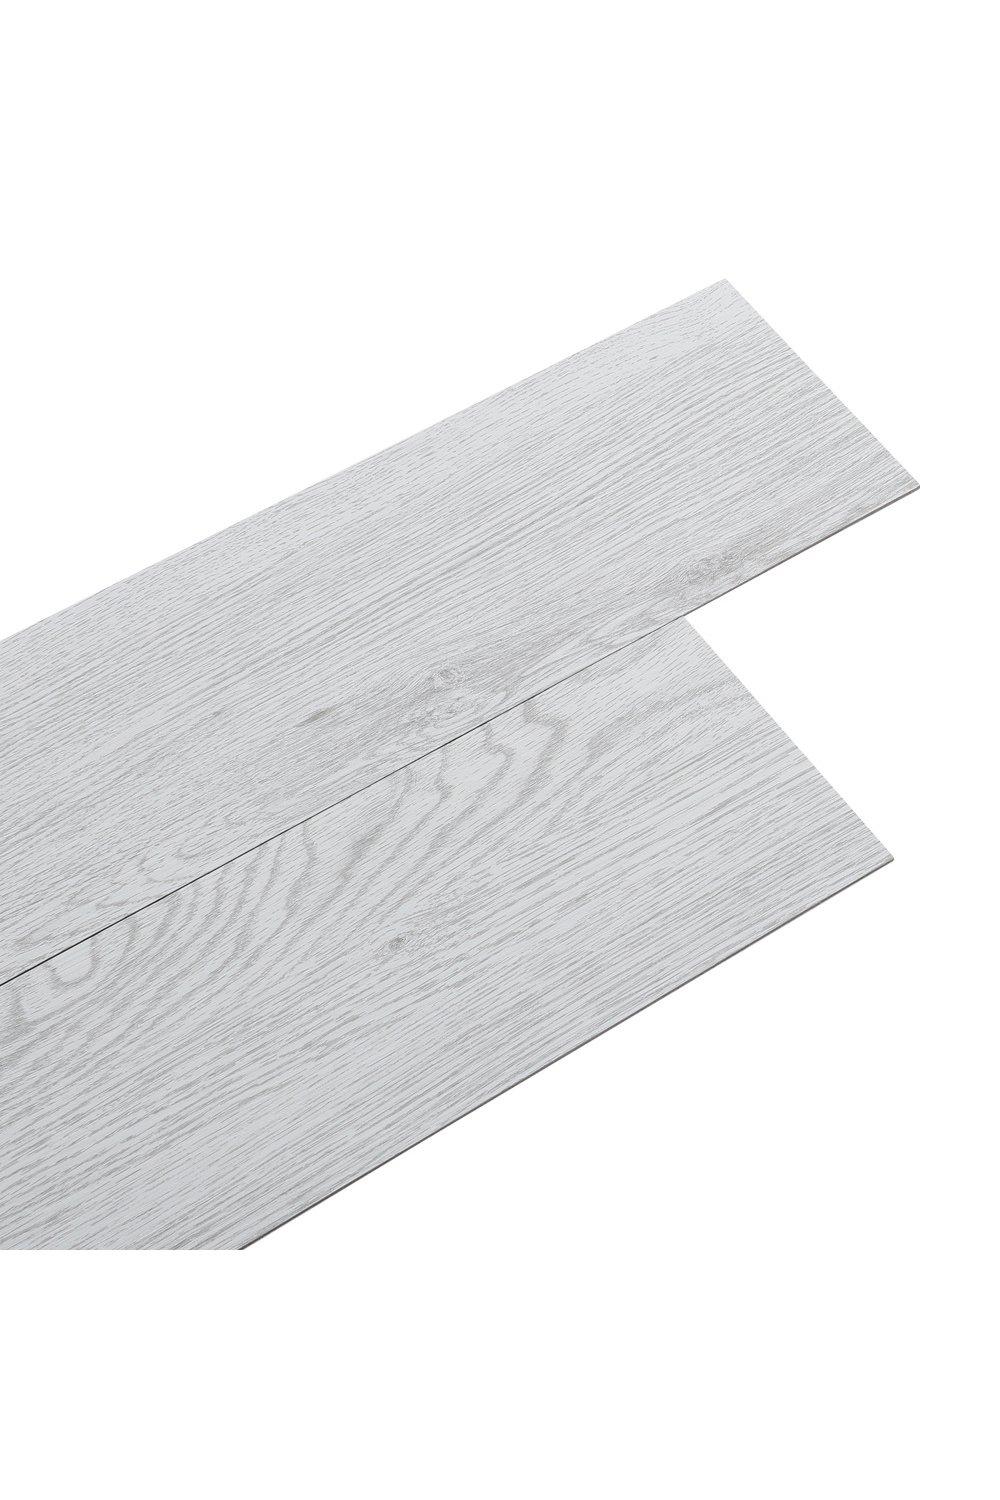 36Pcs PVC Wooden Self-adhesive Laminate Flooring Planks